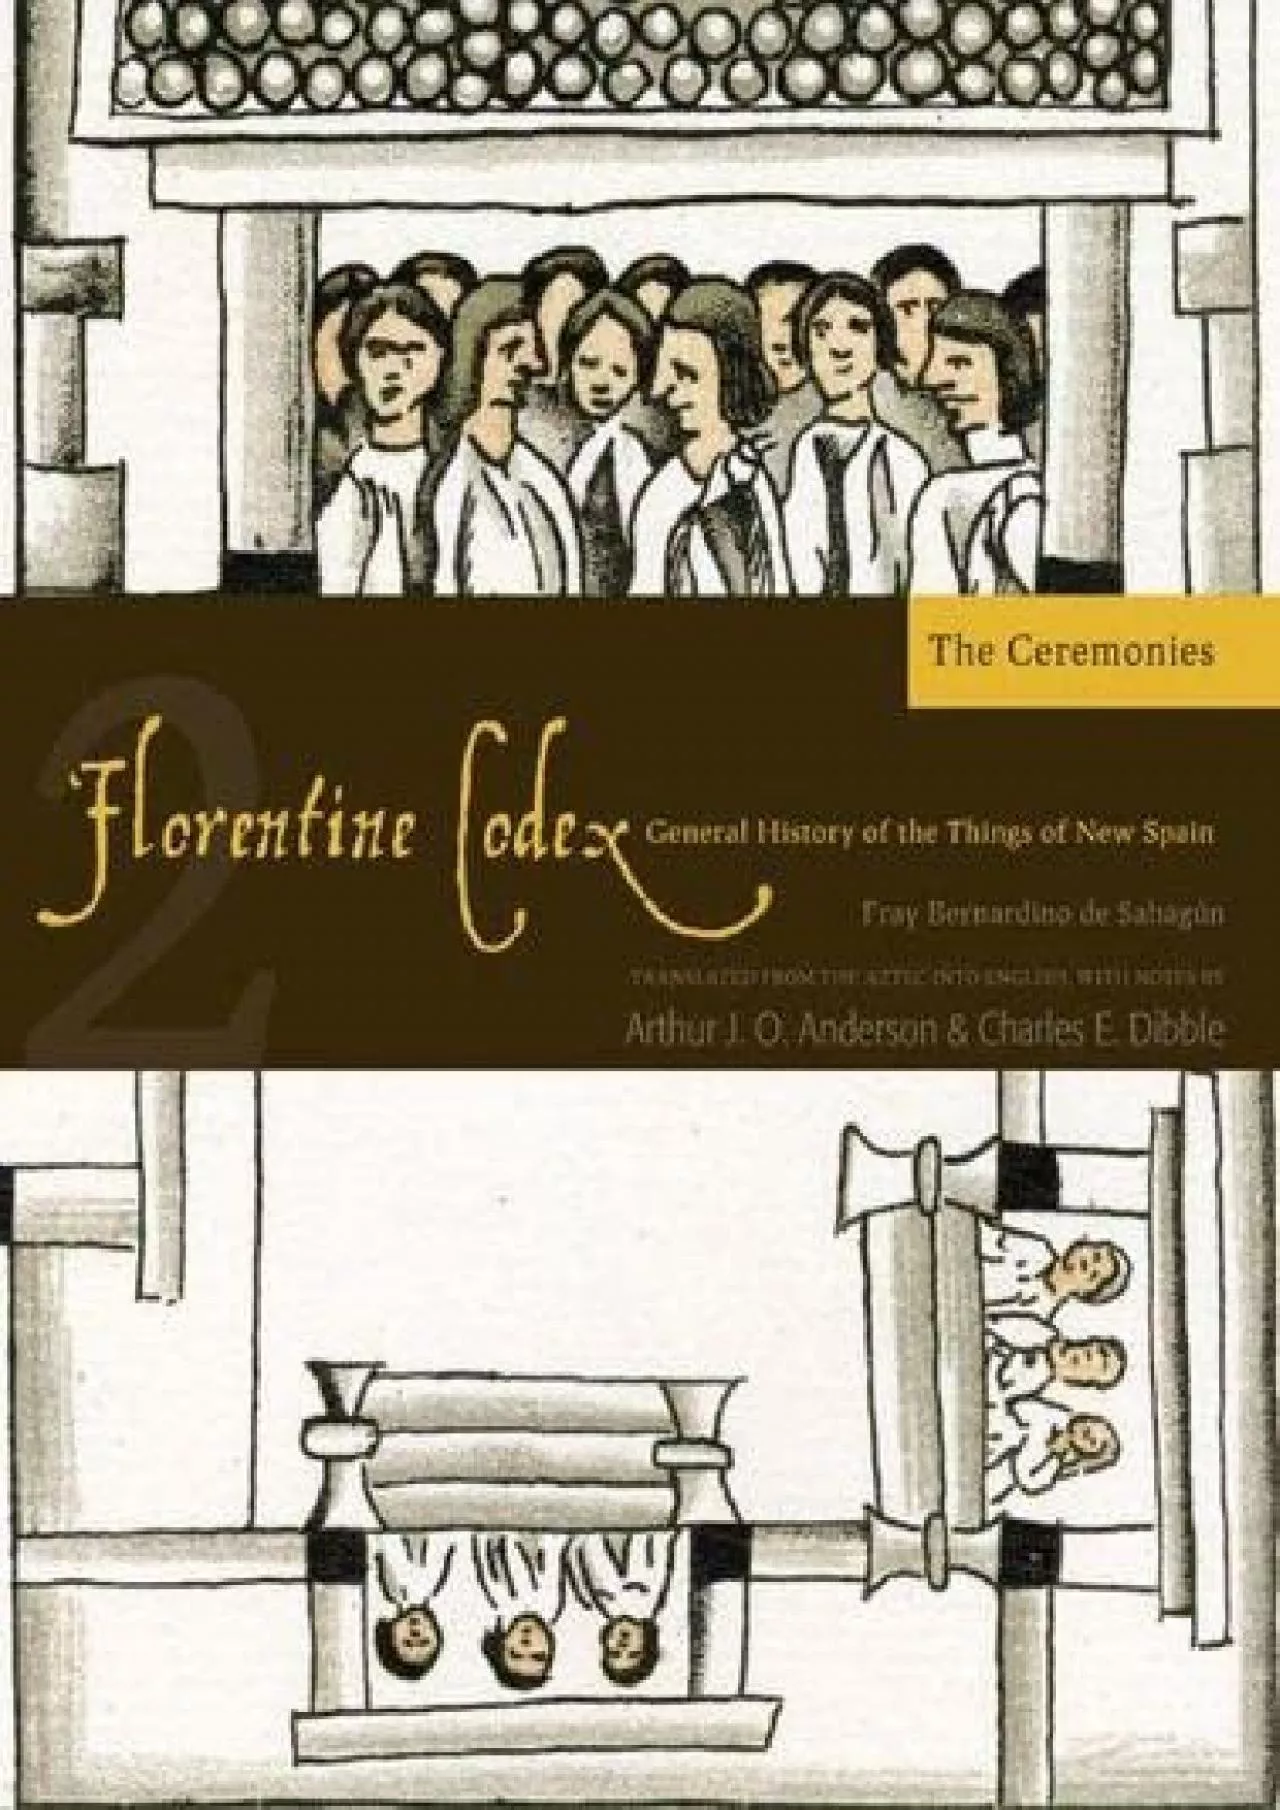 (BOOK)-Florentine Codex: Book 2: Book 2: The Ceremonies (Florentine Codex: General History